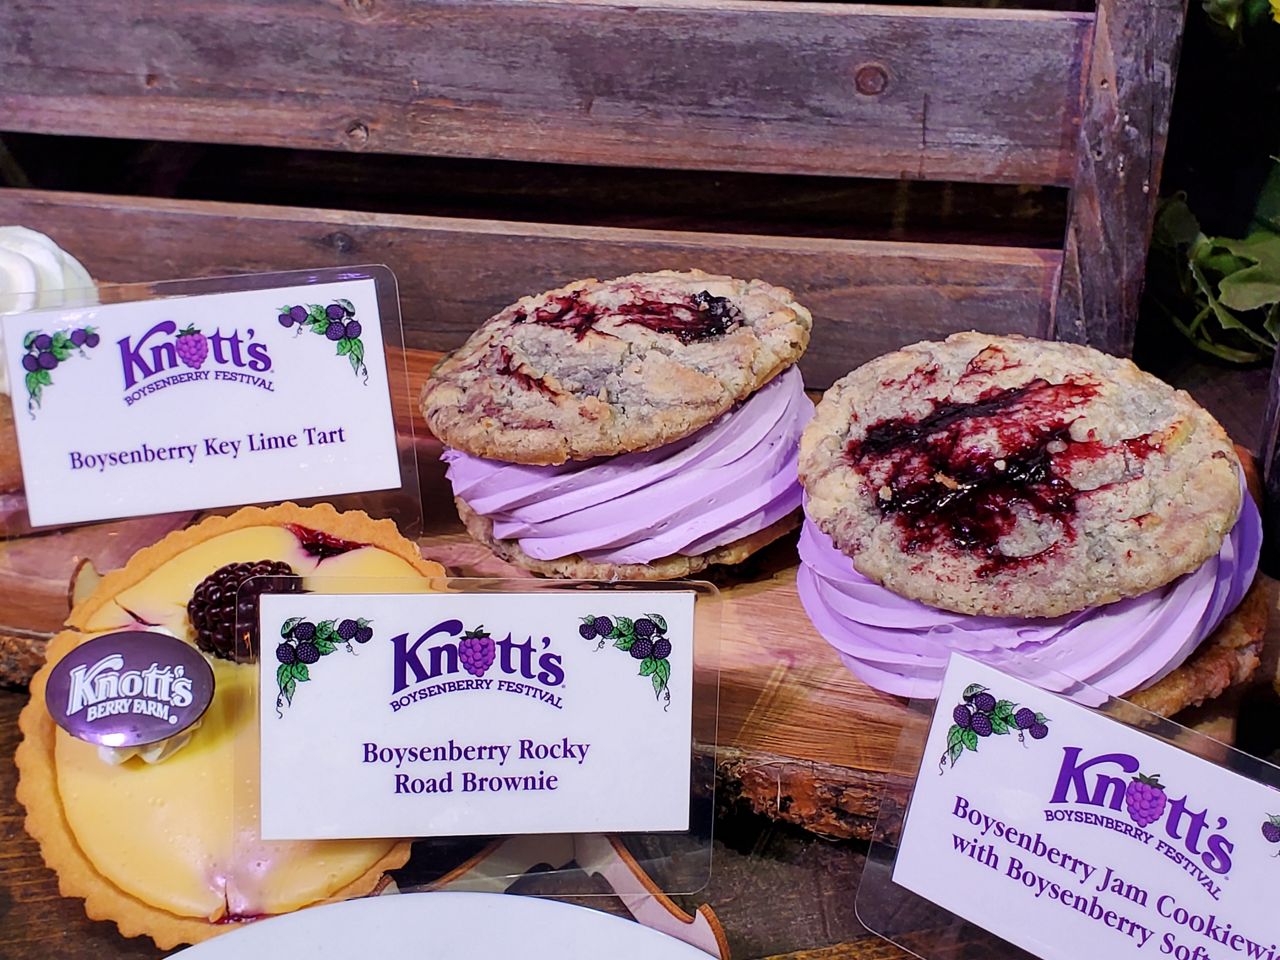 Knott's Berry Farm celebrating the boysenberry